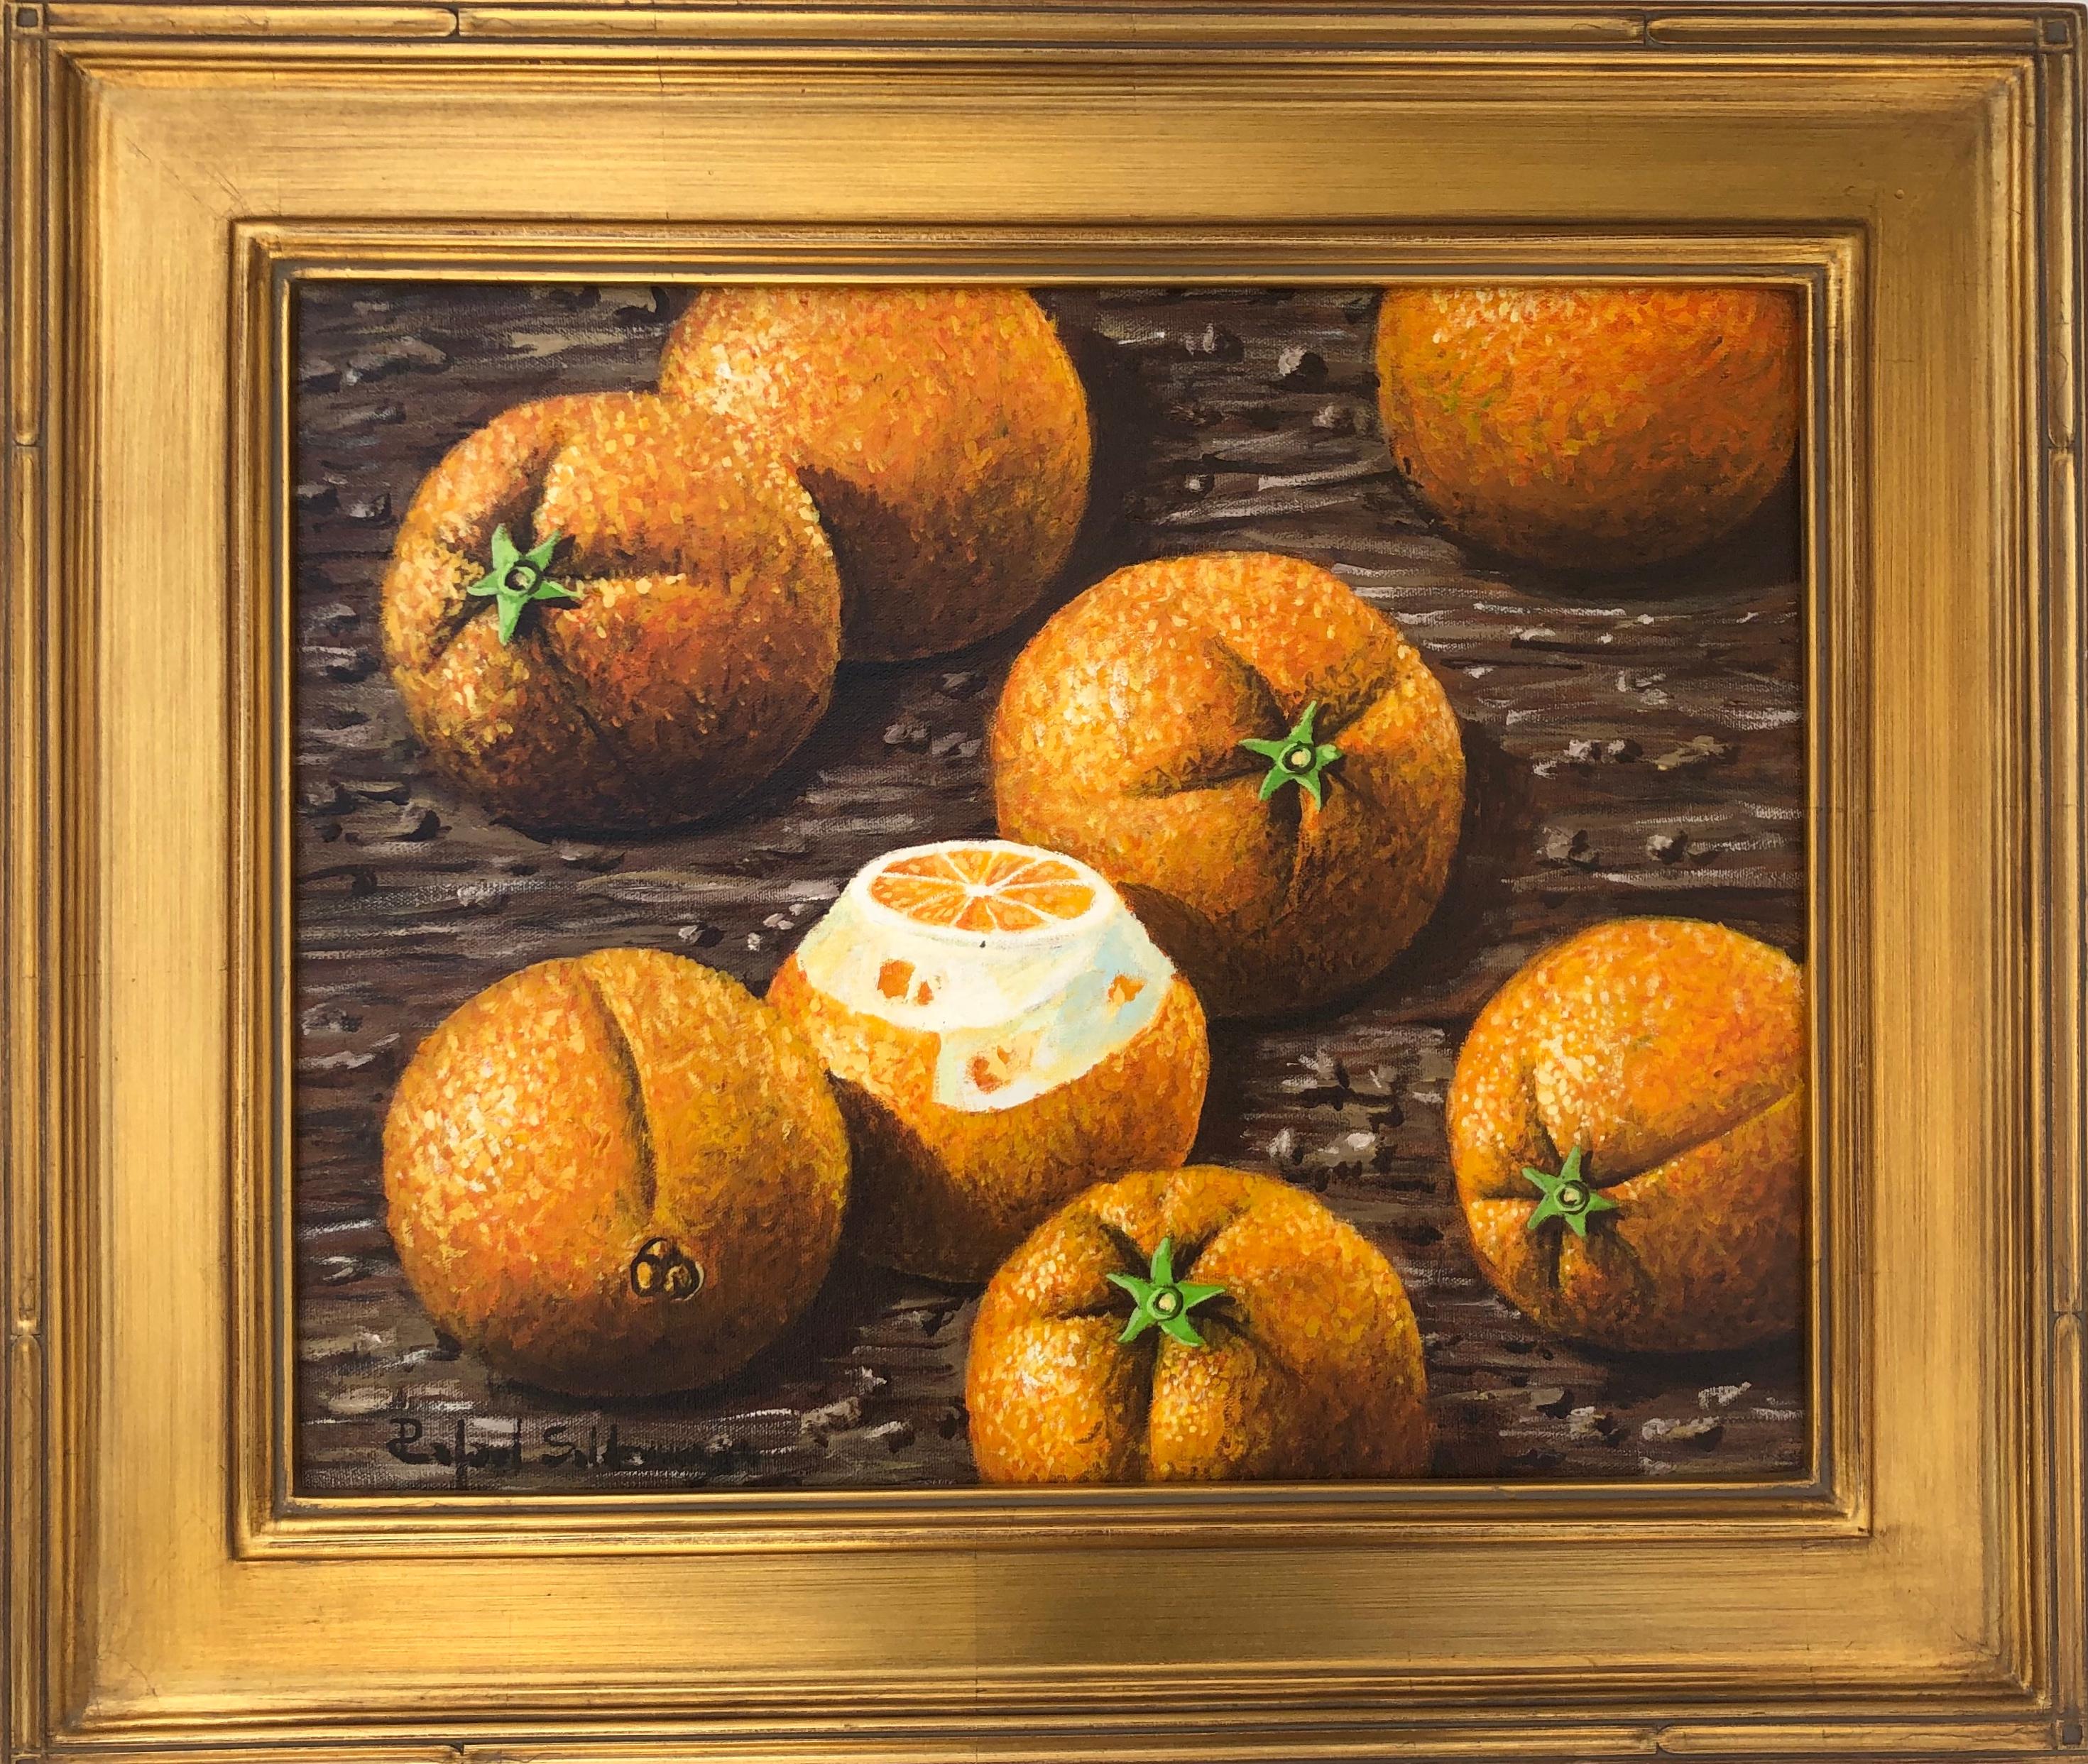 Rafael Saldarriaga Figurative Painting - Still Life with Oranges